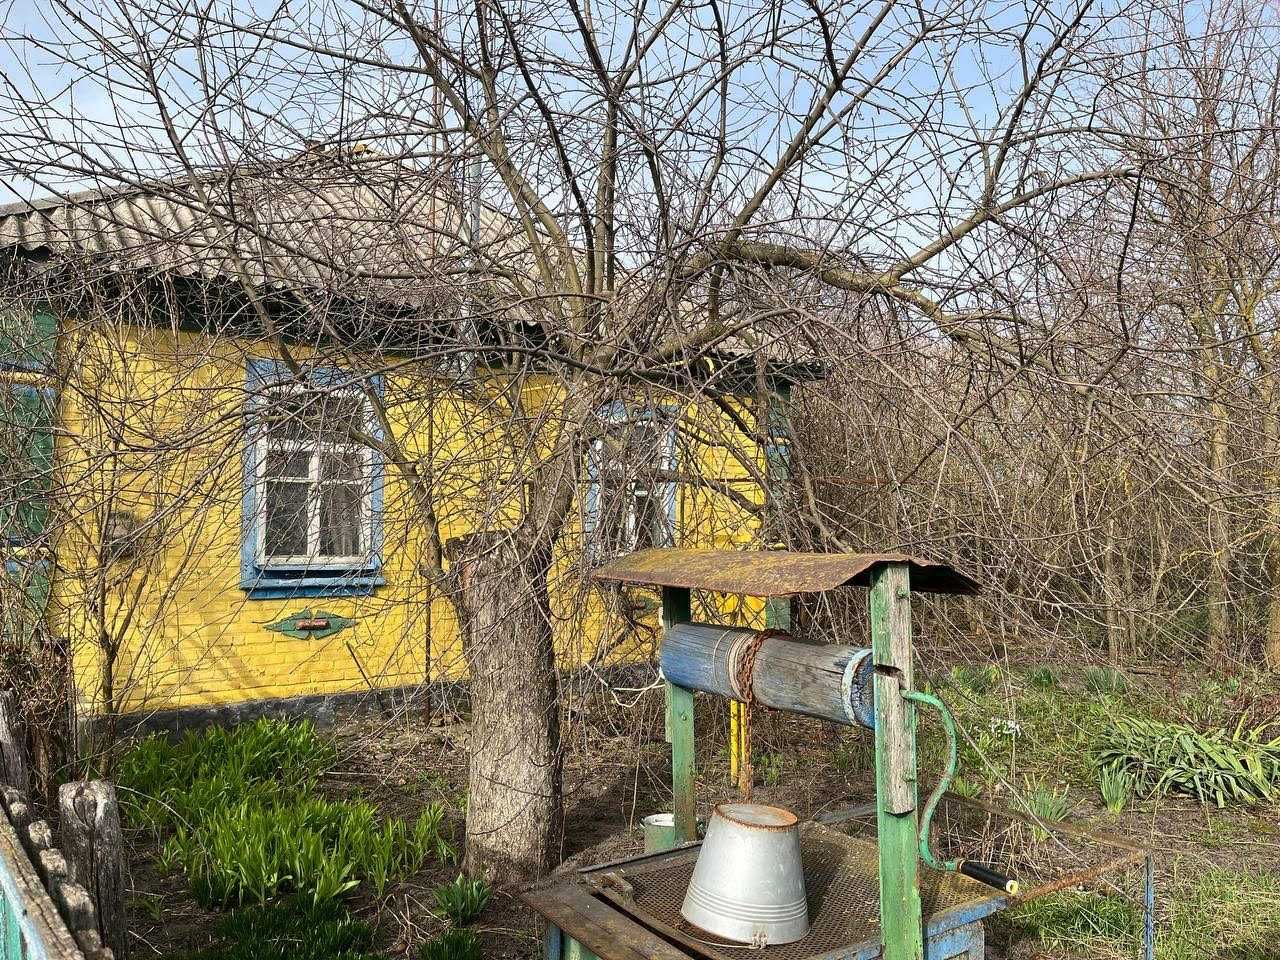 продам будинок в селі